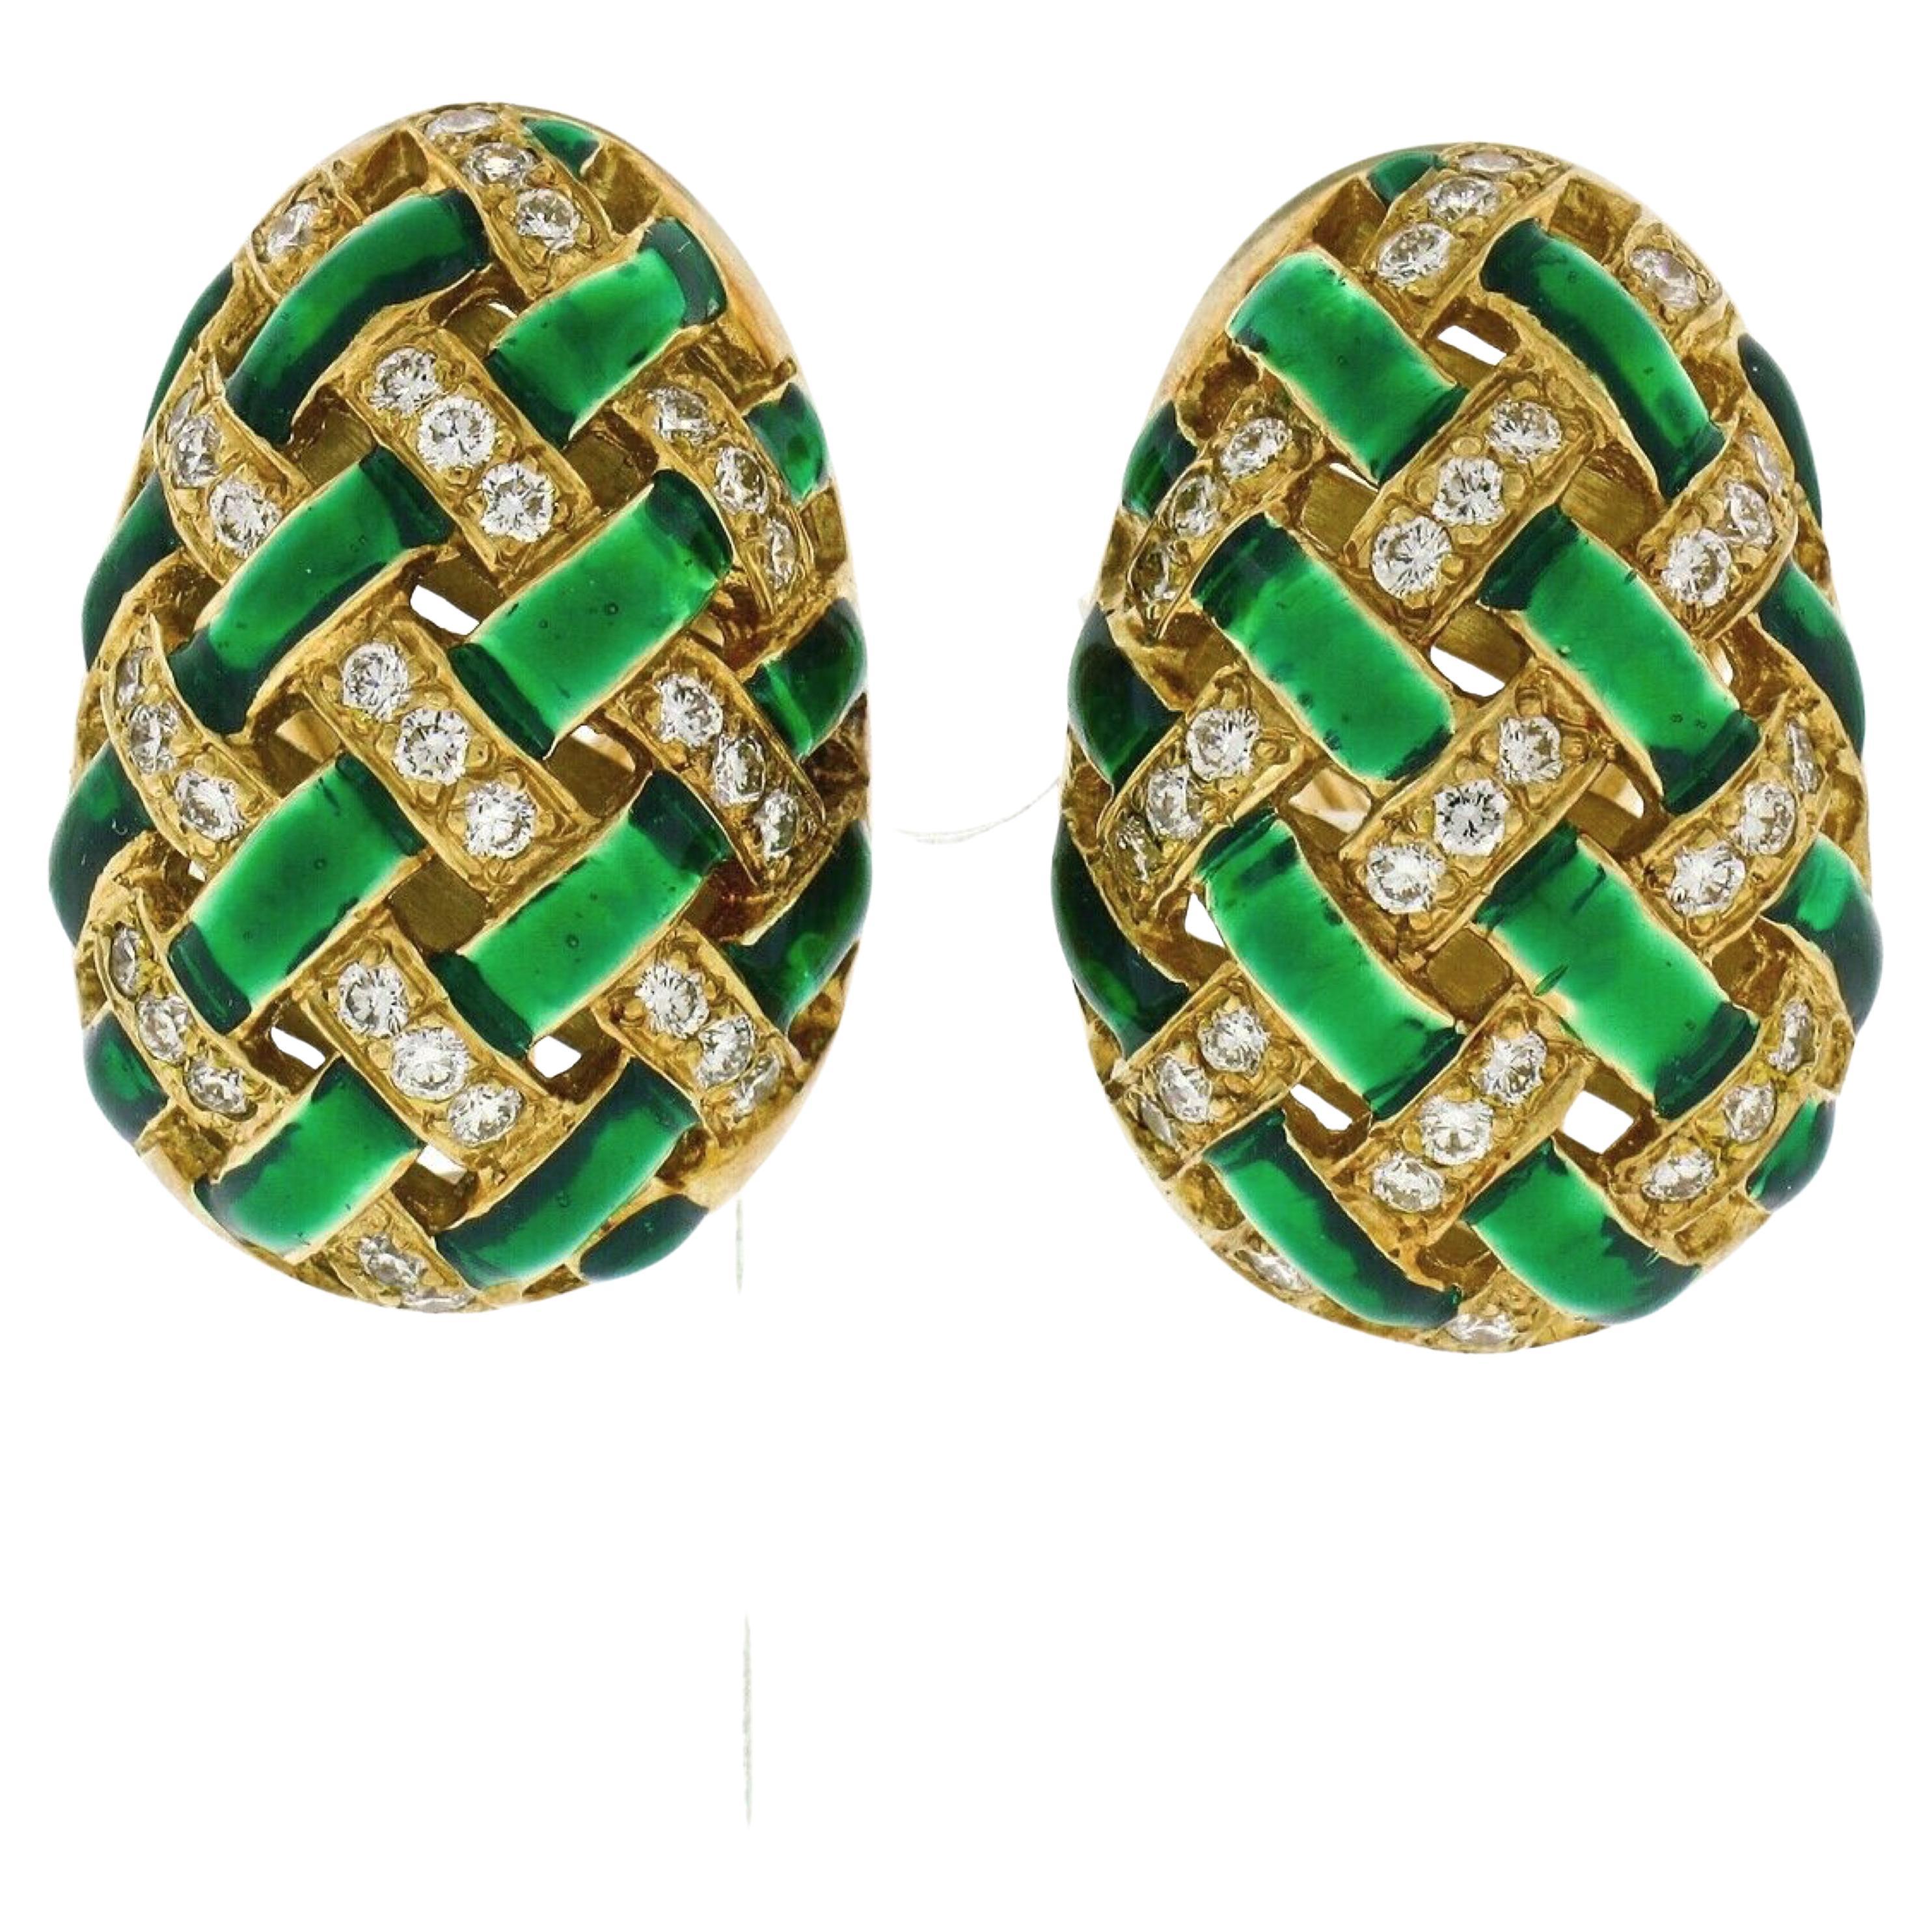 Vintage 18k Yellow Gold Diamond Green Enamel Egg Basket Weave Clip on Earrings